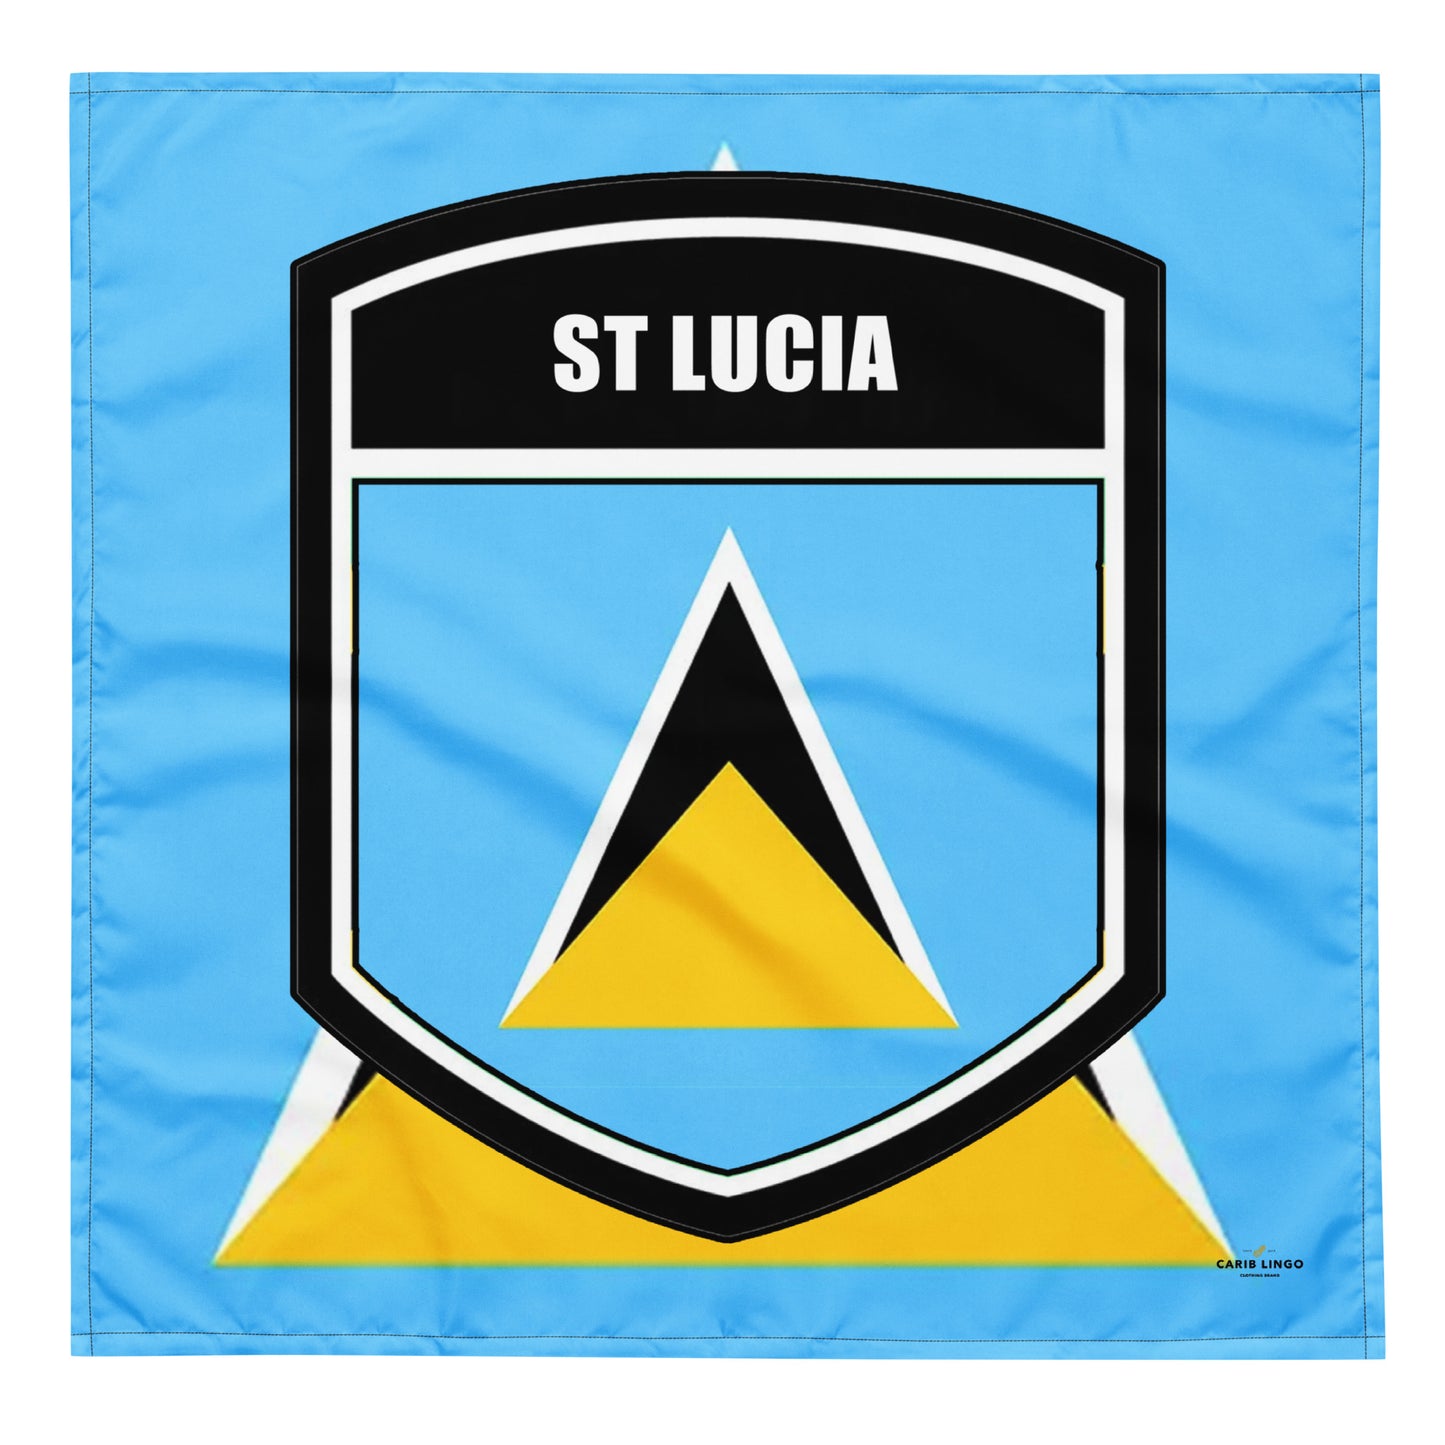 St. Lucia bandana